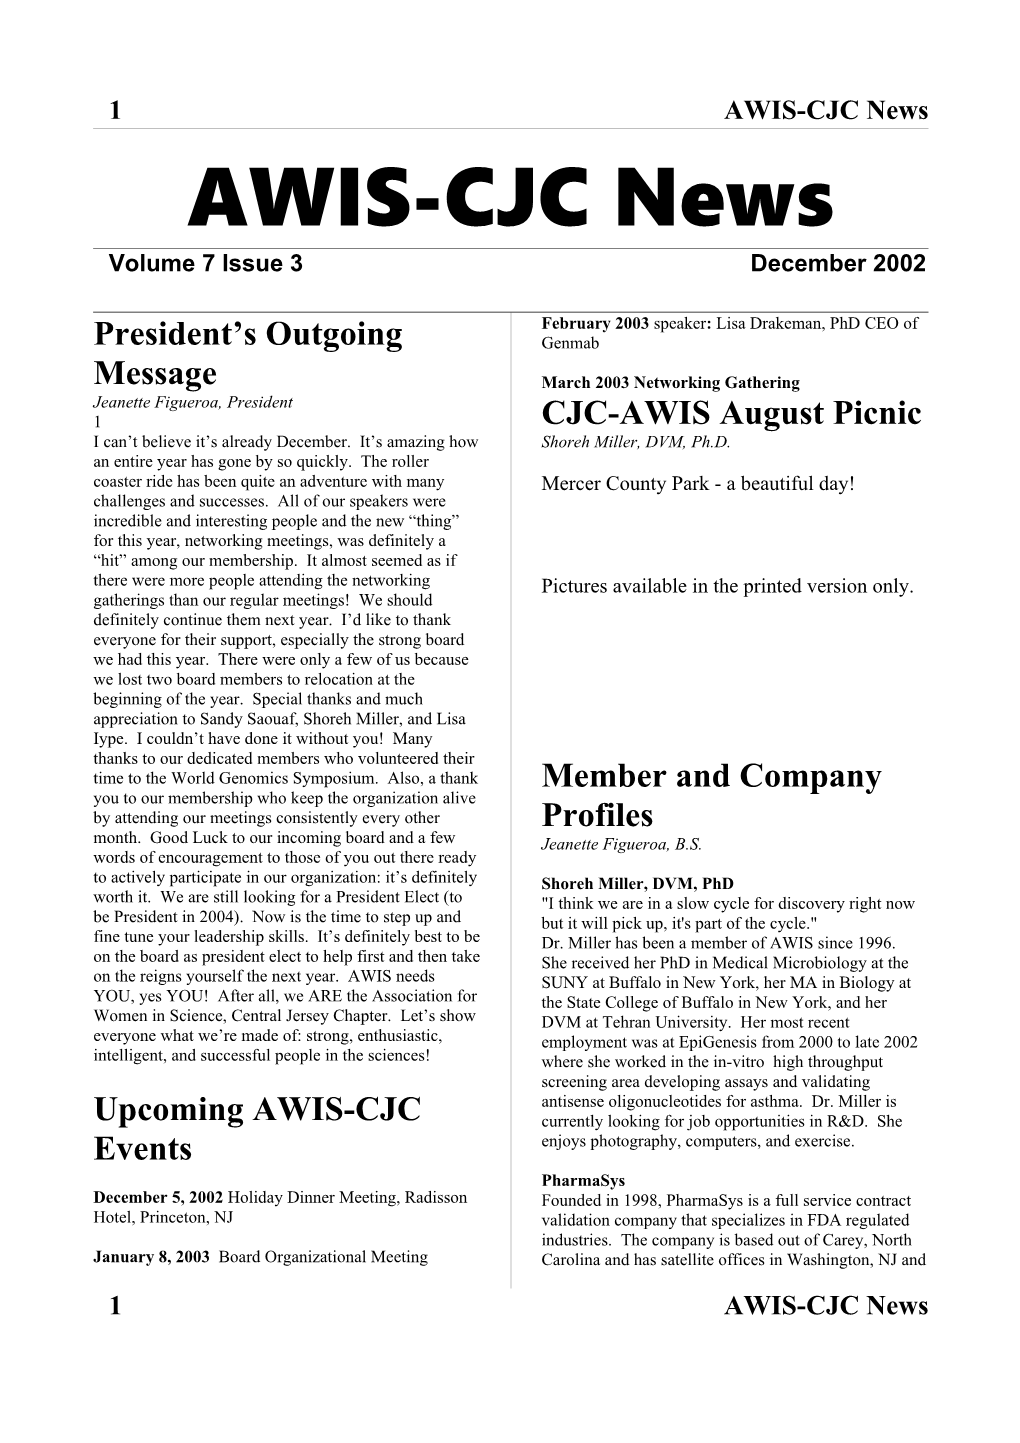 AWIS-CJC News